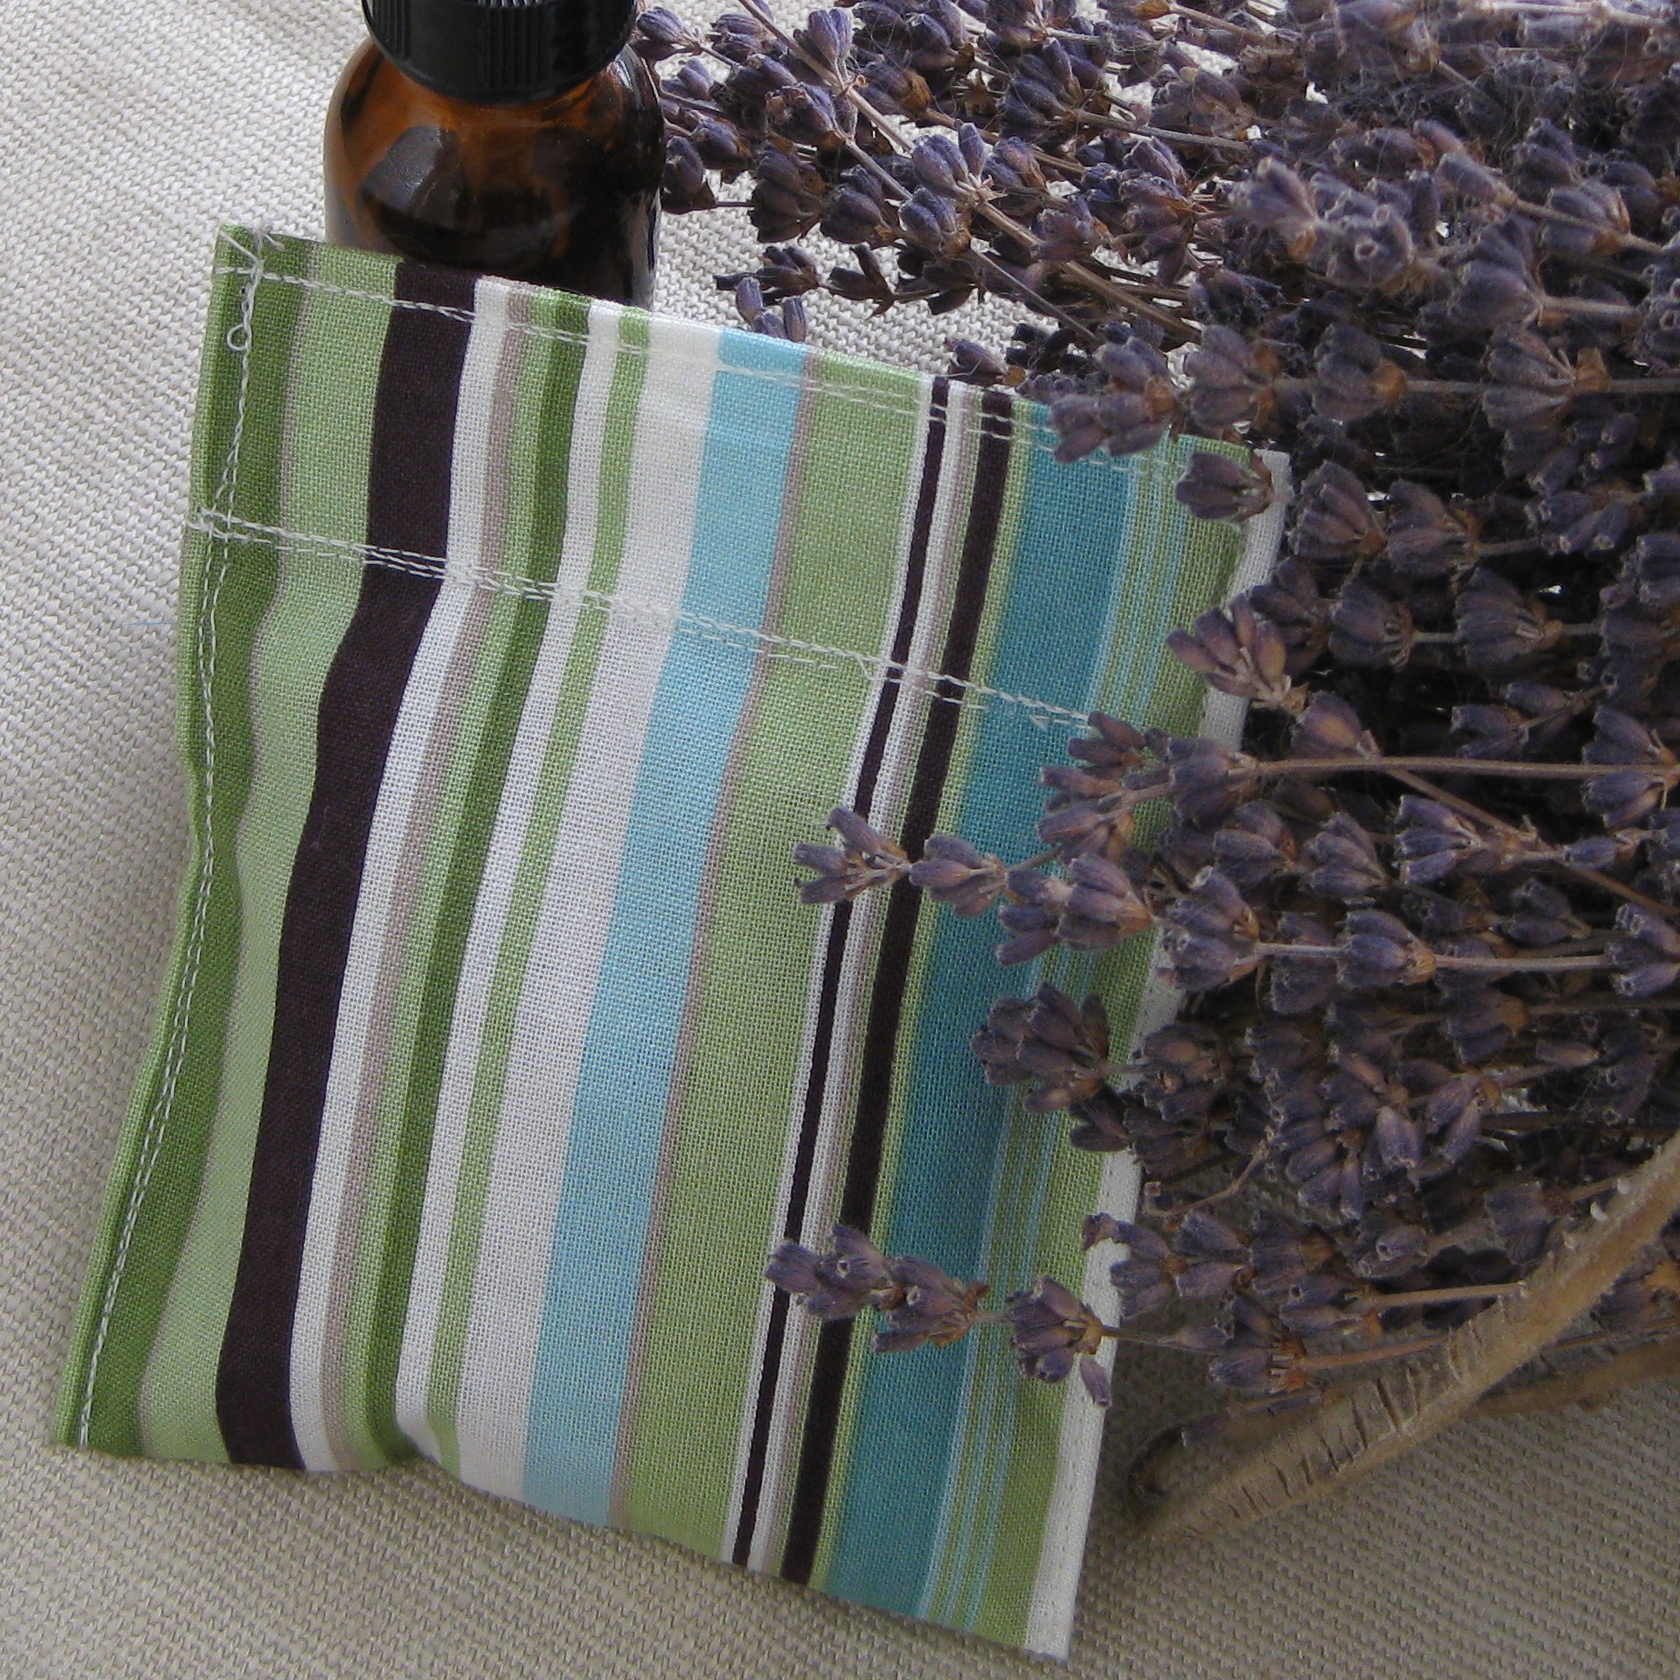 DIY reusable AND refillable herbal dryer sachets from katienormalgirl.com | #DIY #natural #home